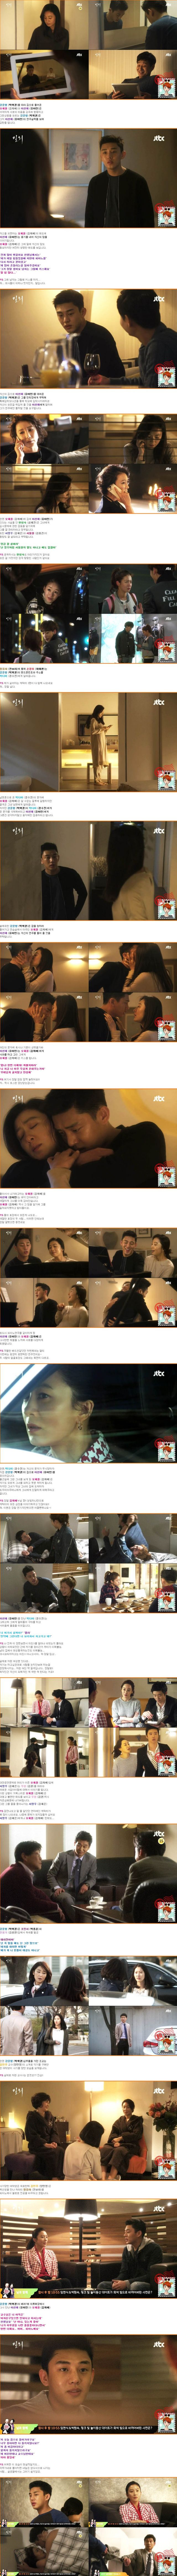 episode 5 captures for the Korean drama 'Secret Love Affair'